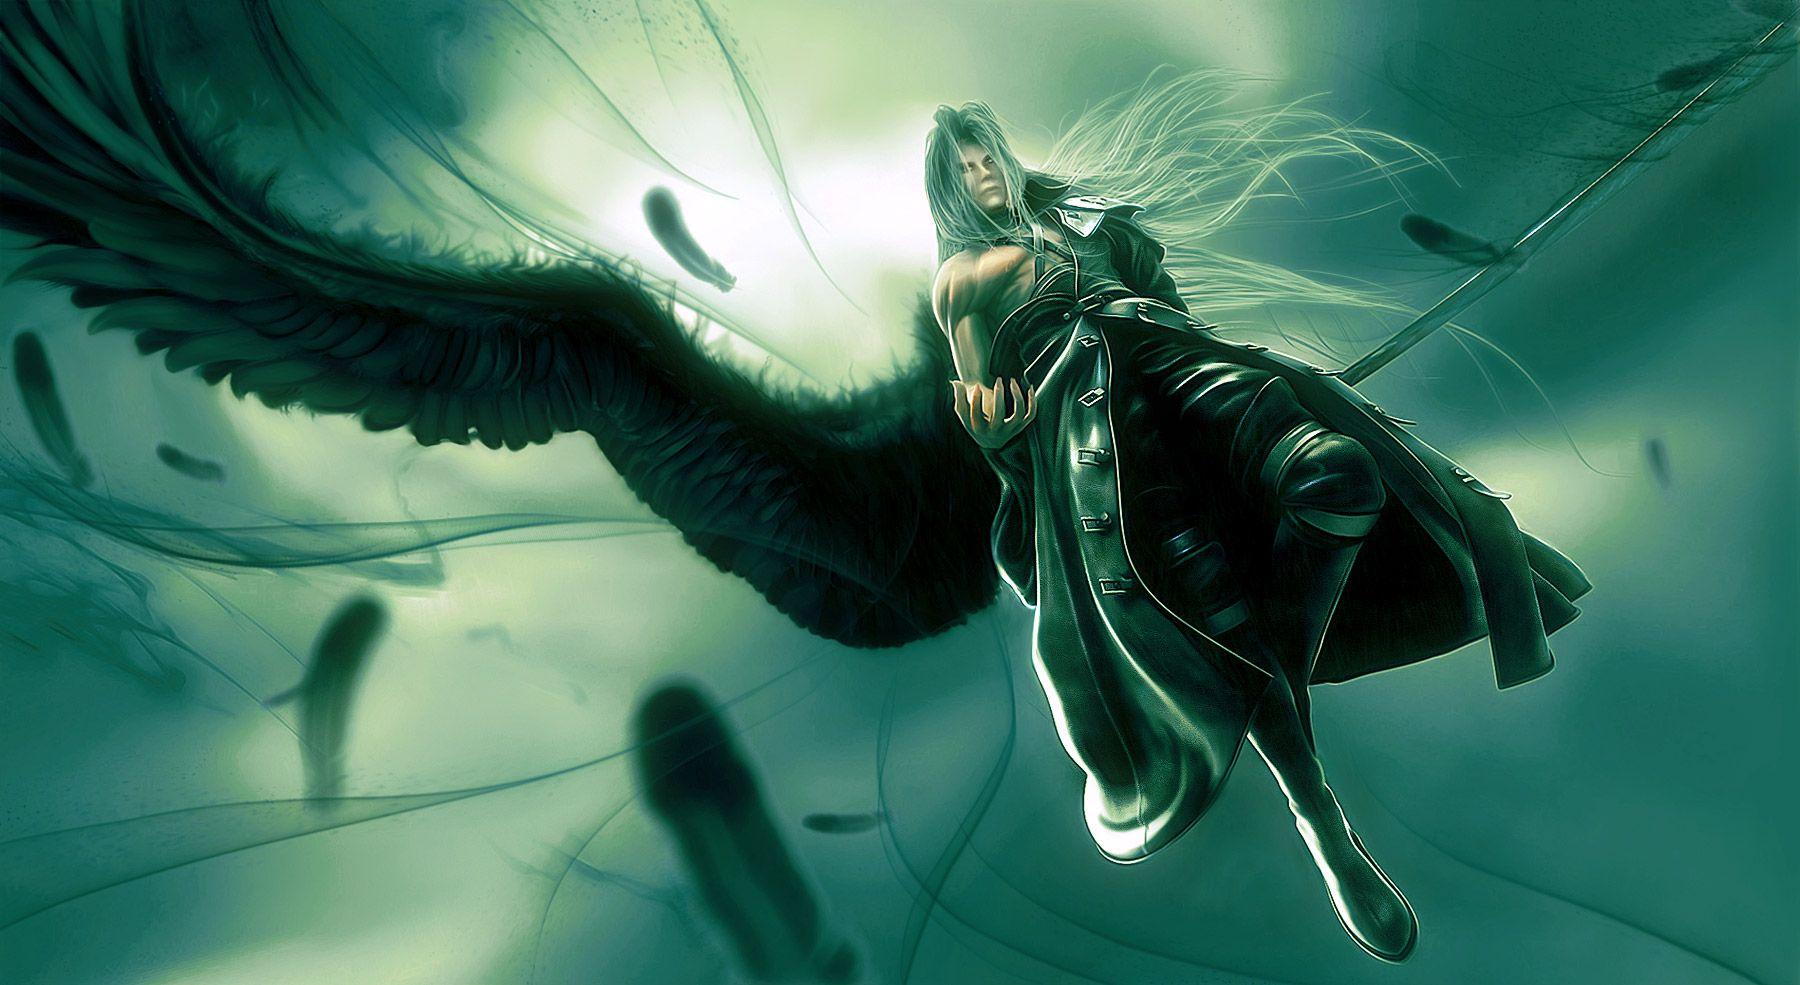 Sephiroth Fantasy VII Anime Image Board